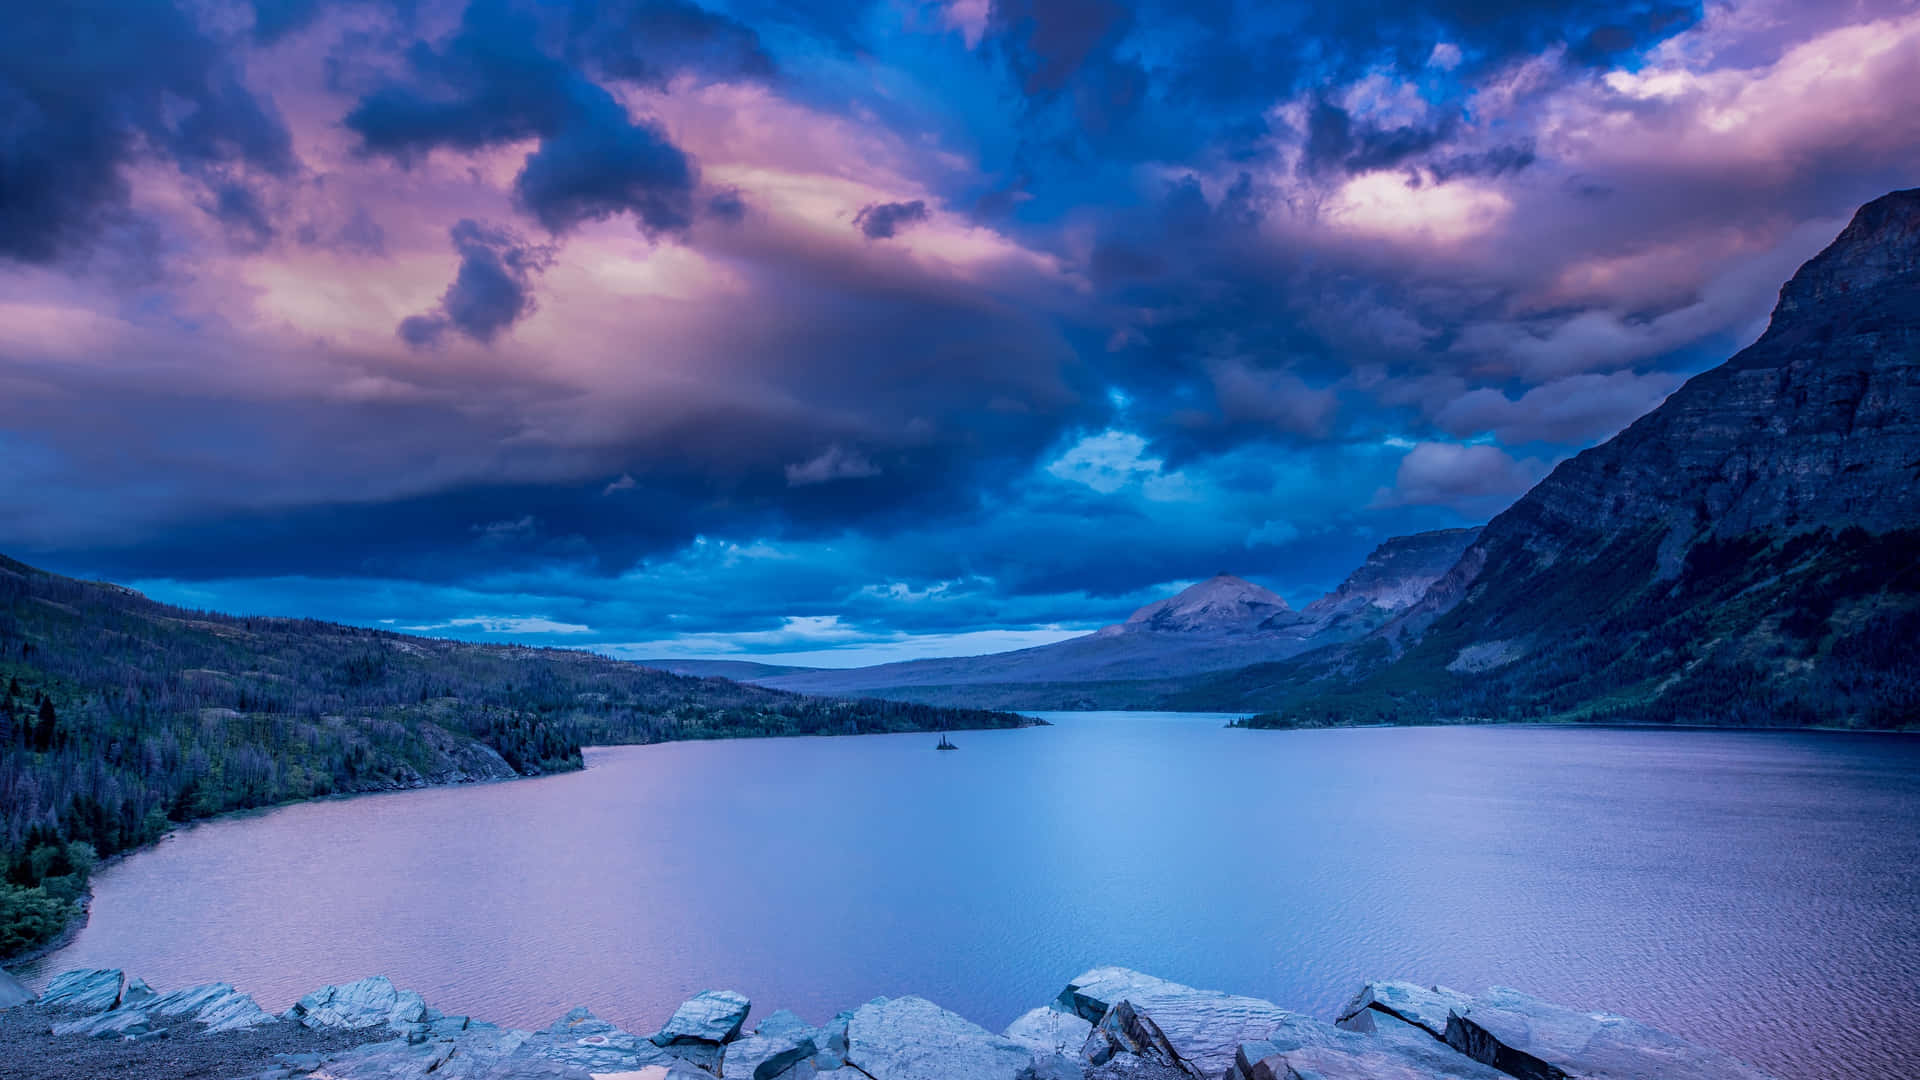 Rocky Mountains 2560 X 1440 Wallpaper